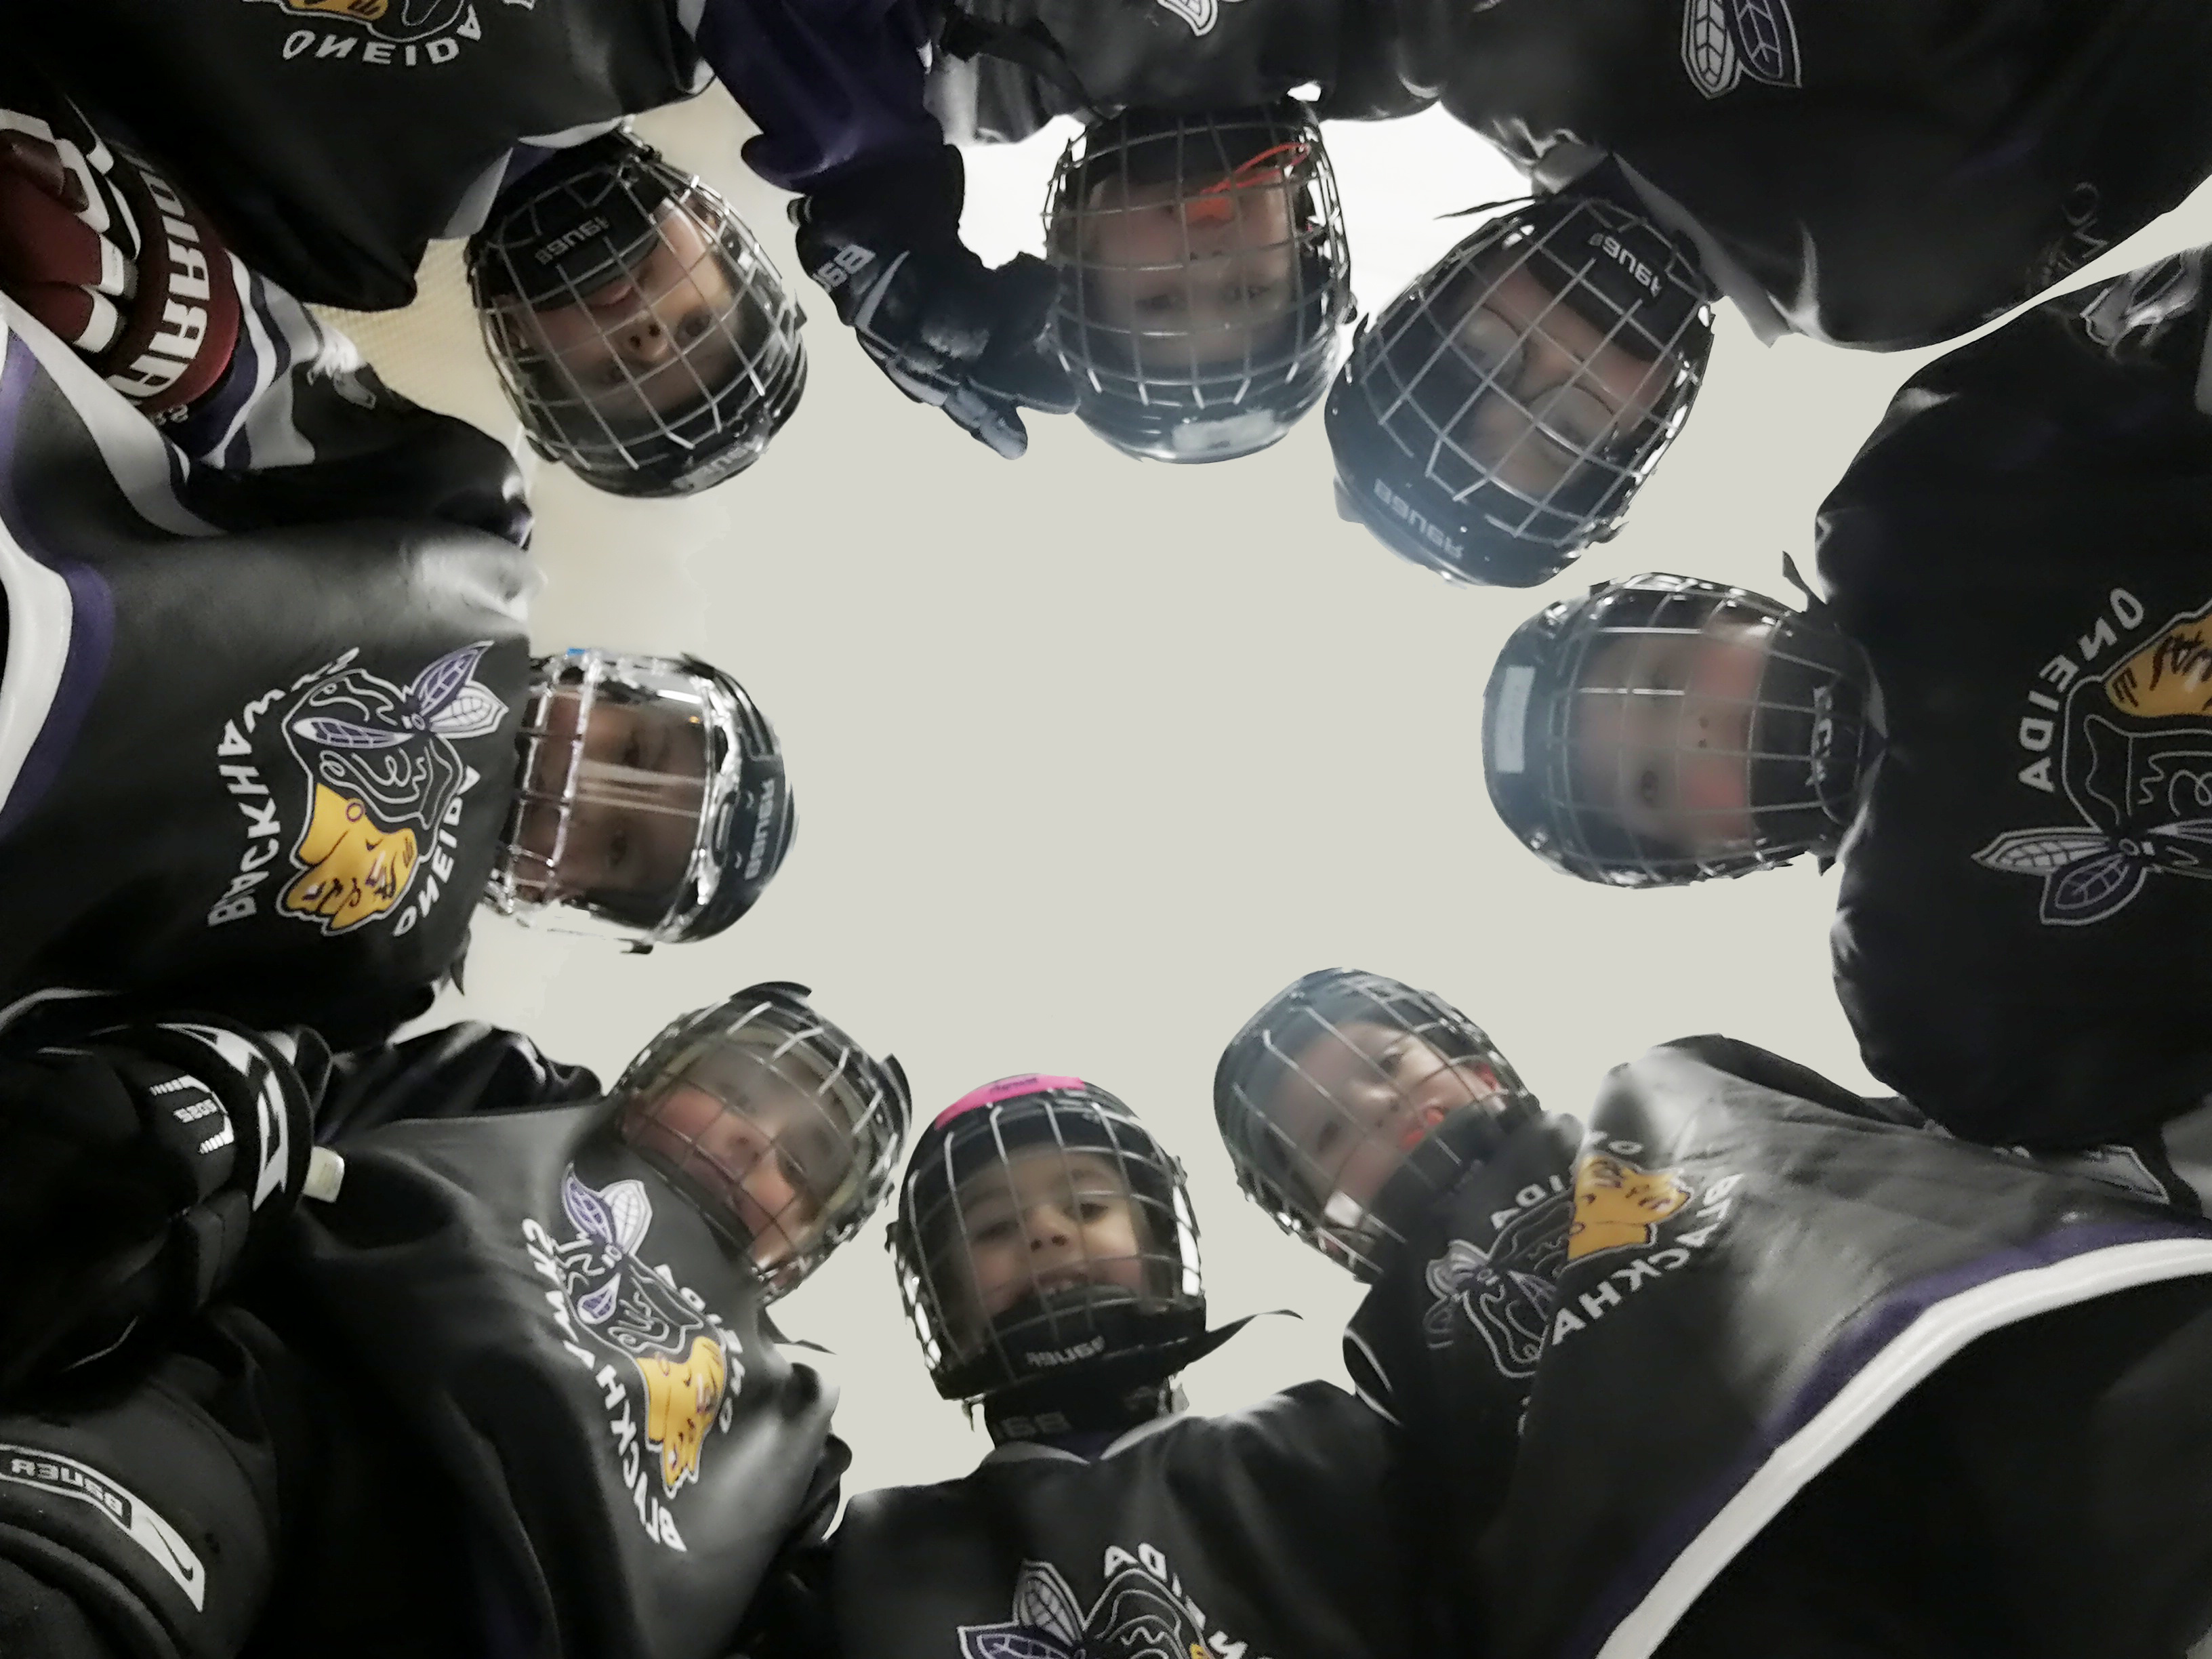 Photo of a Little NHL hockey team